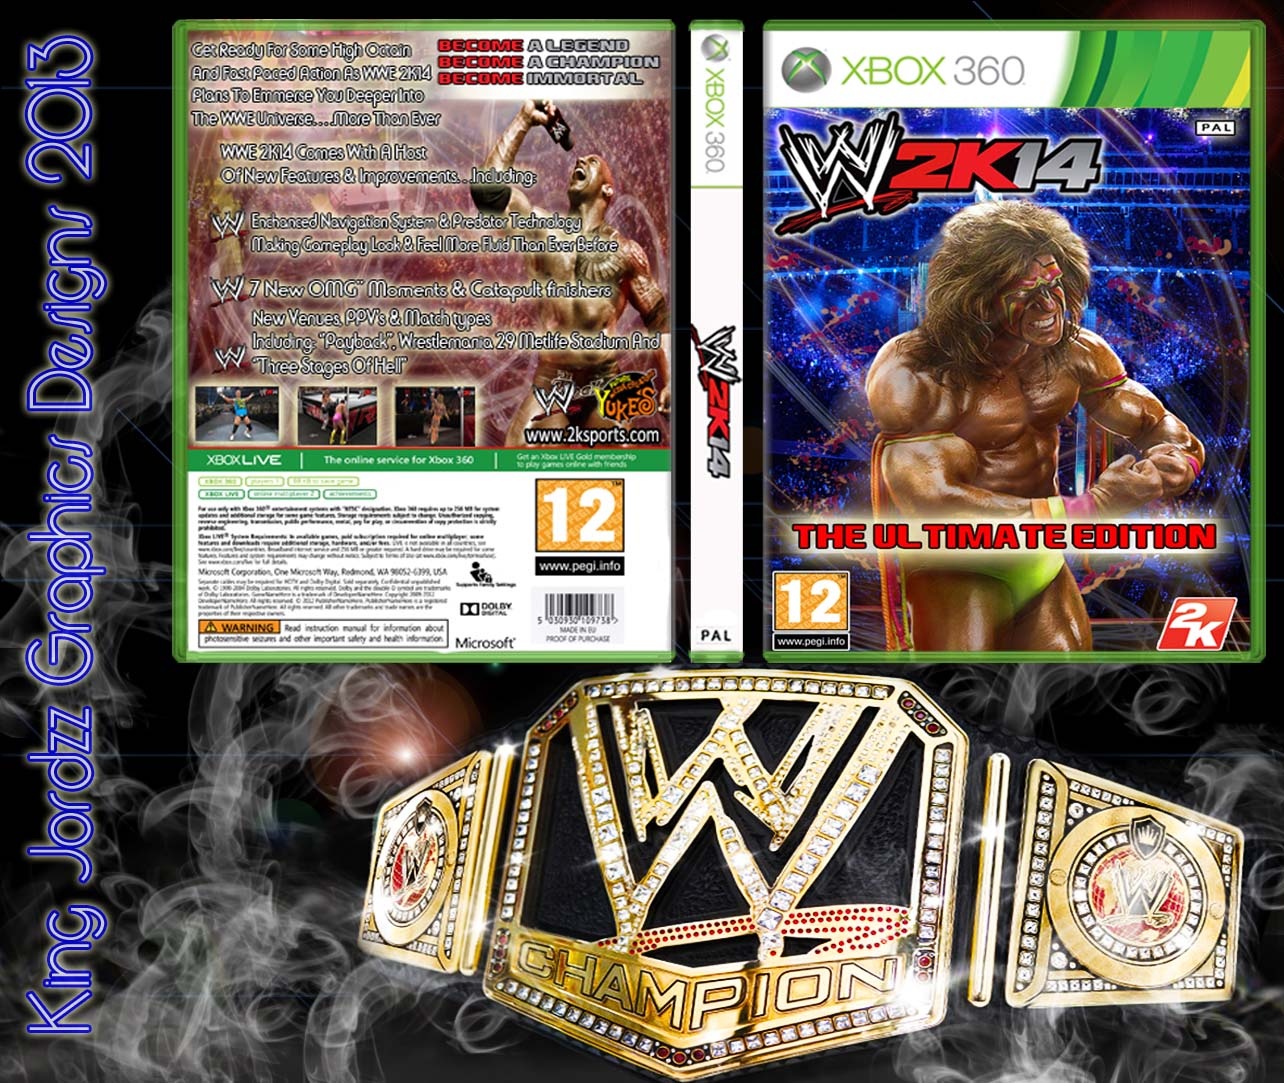 WWE 2K14 box cover